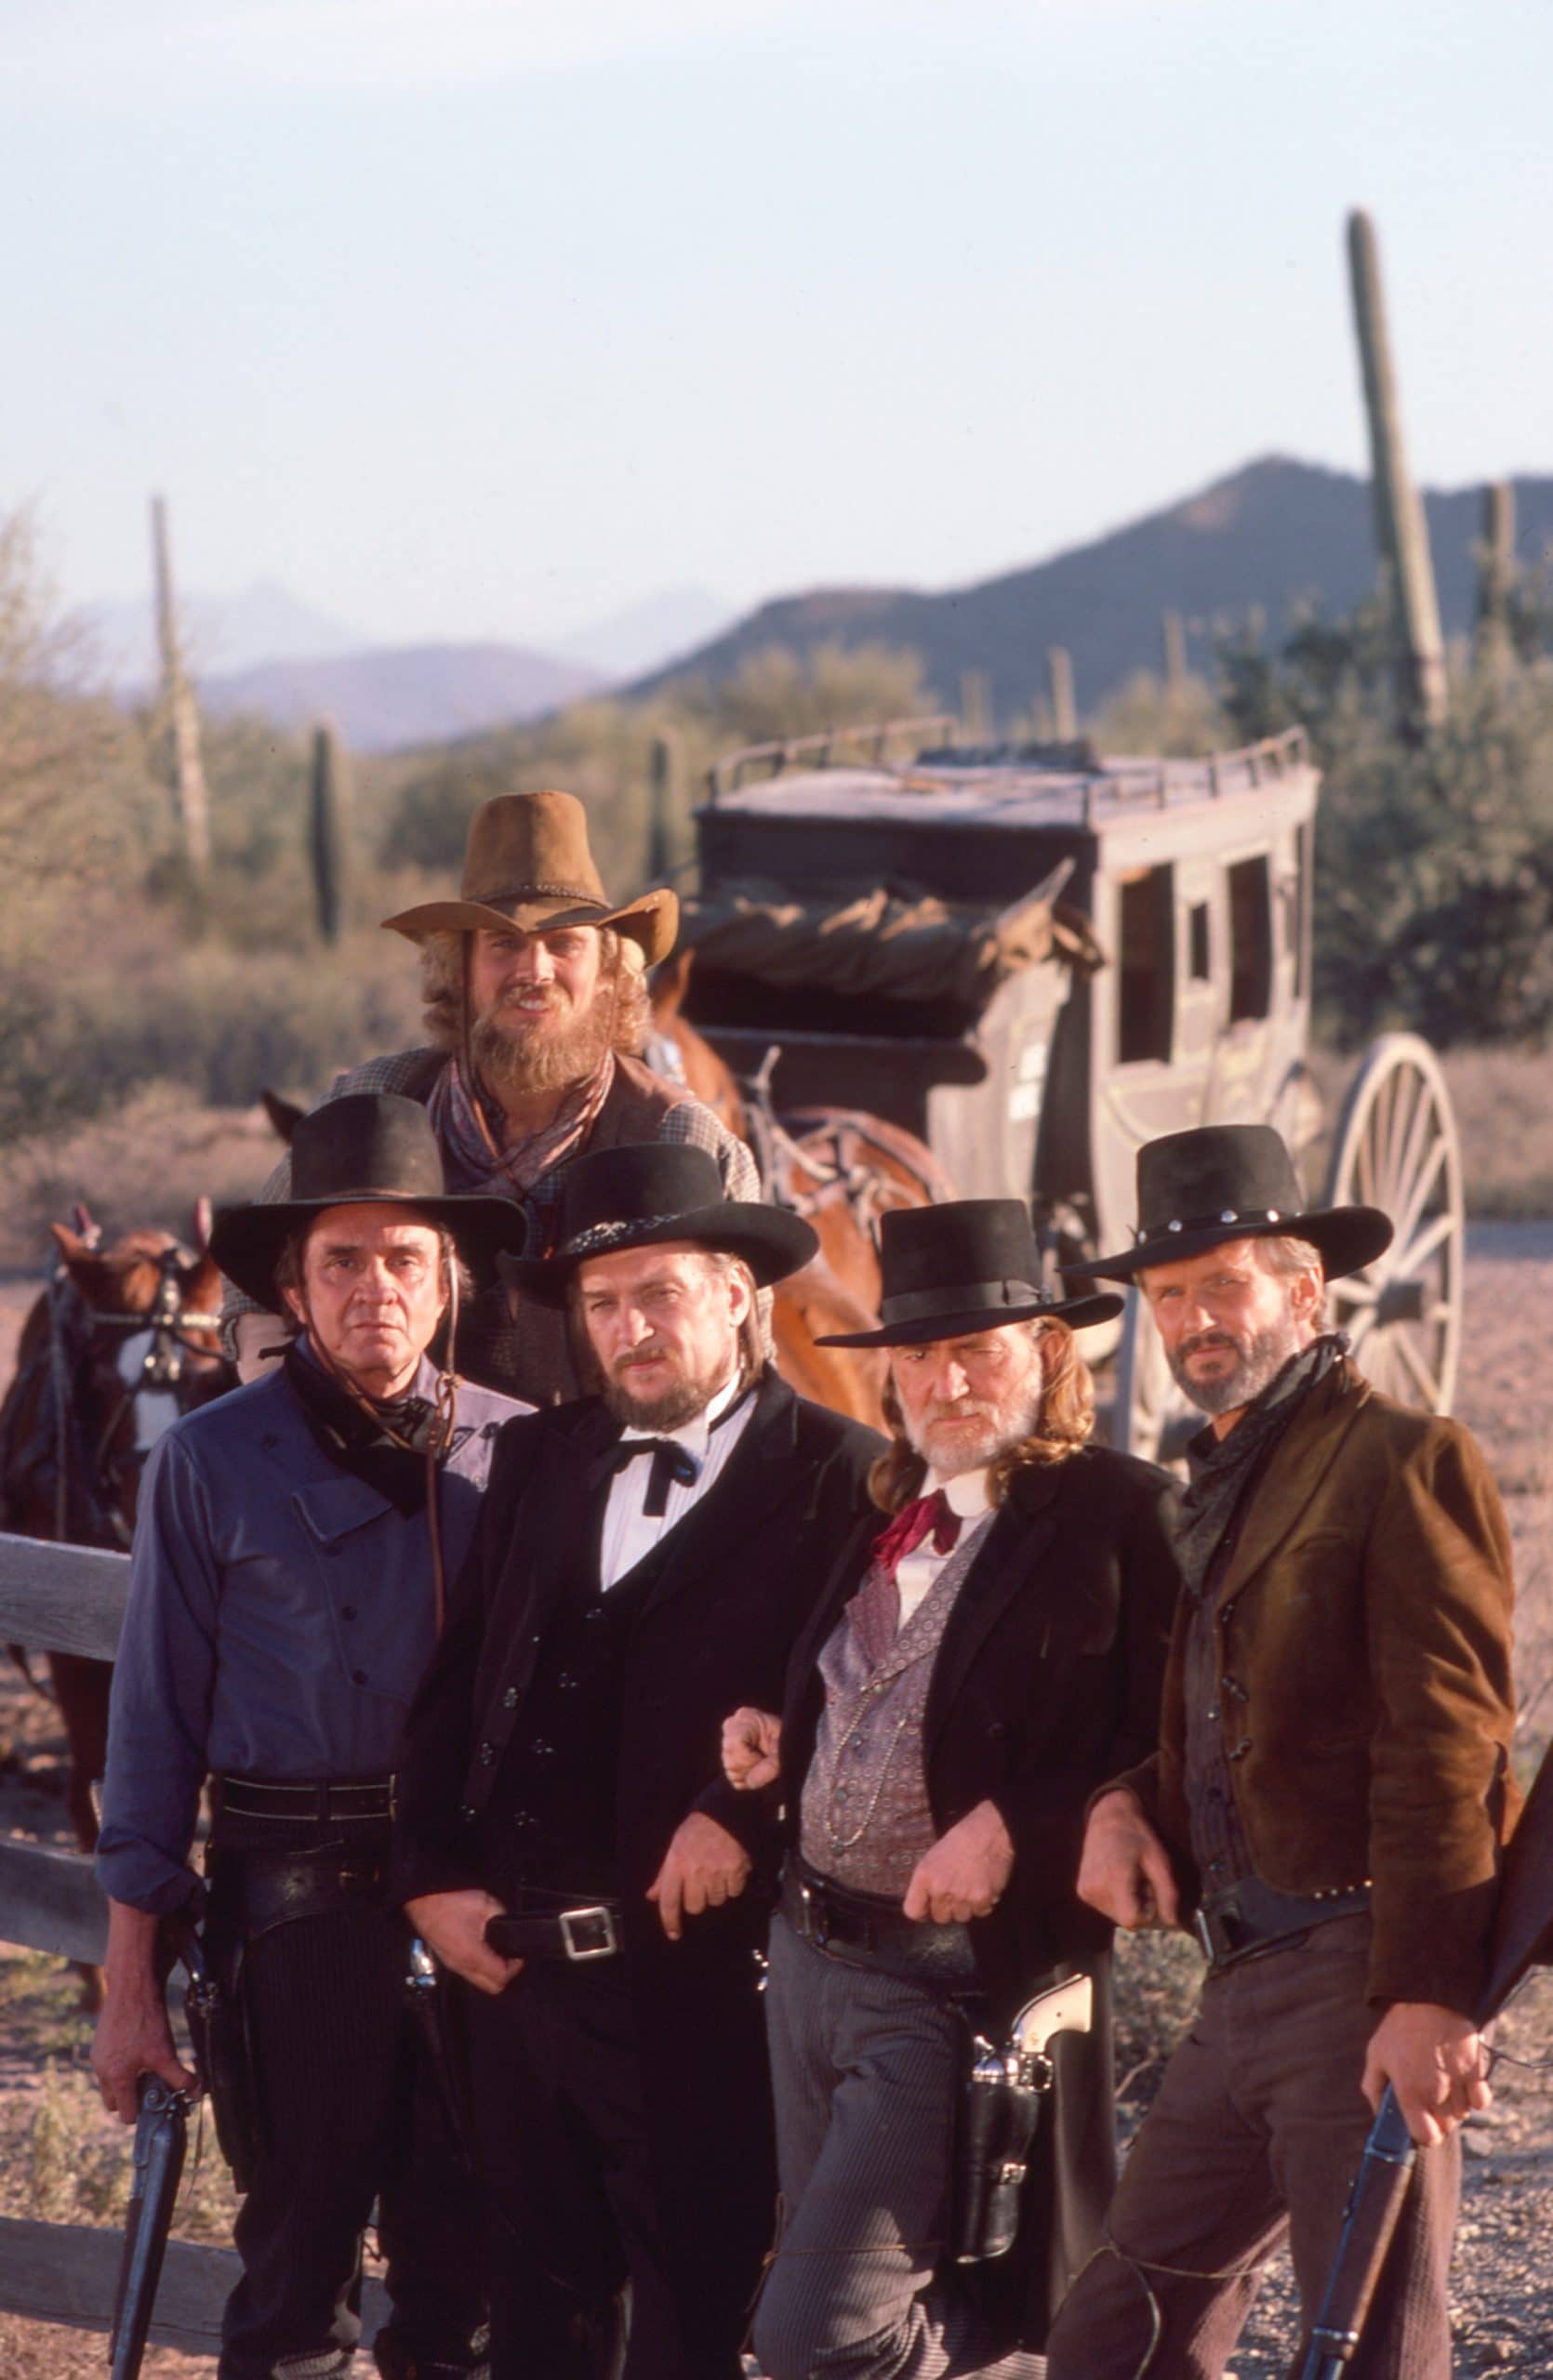 STAGECOACH, front row from left: Johnny Cash, Willie Nelson, Waylon Jennings, Kris Kristofferson, back row: John Schneider